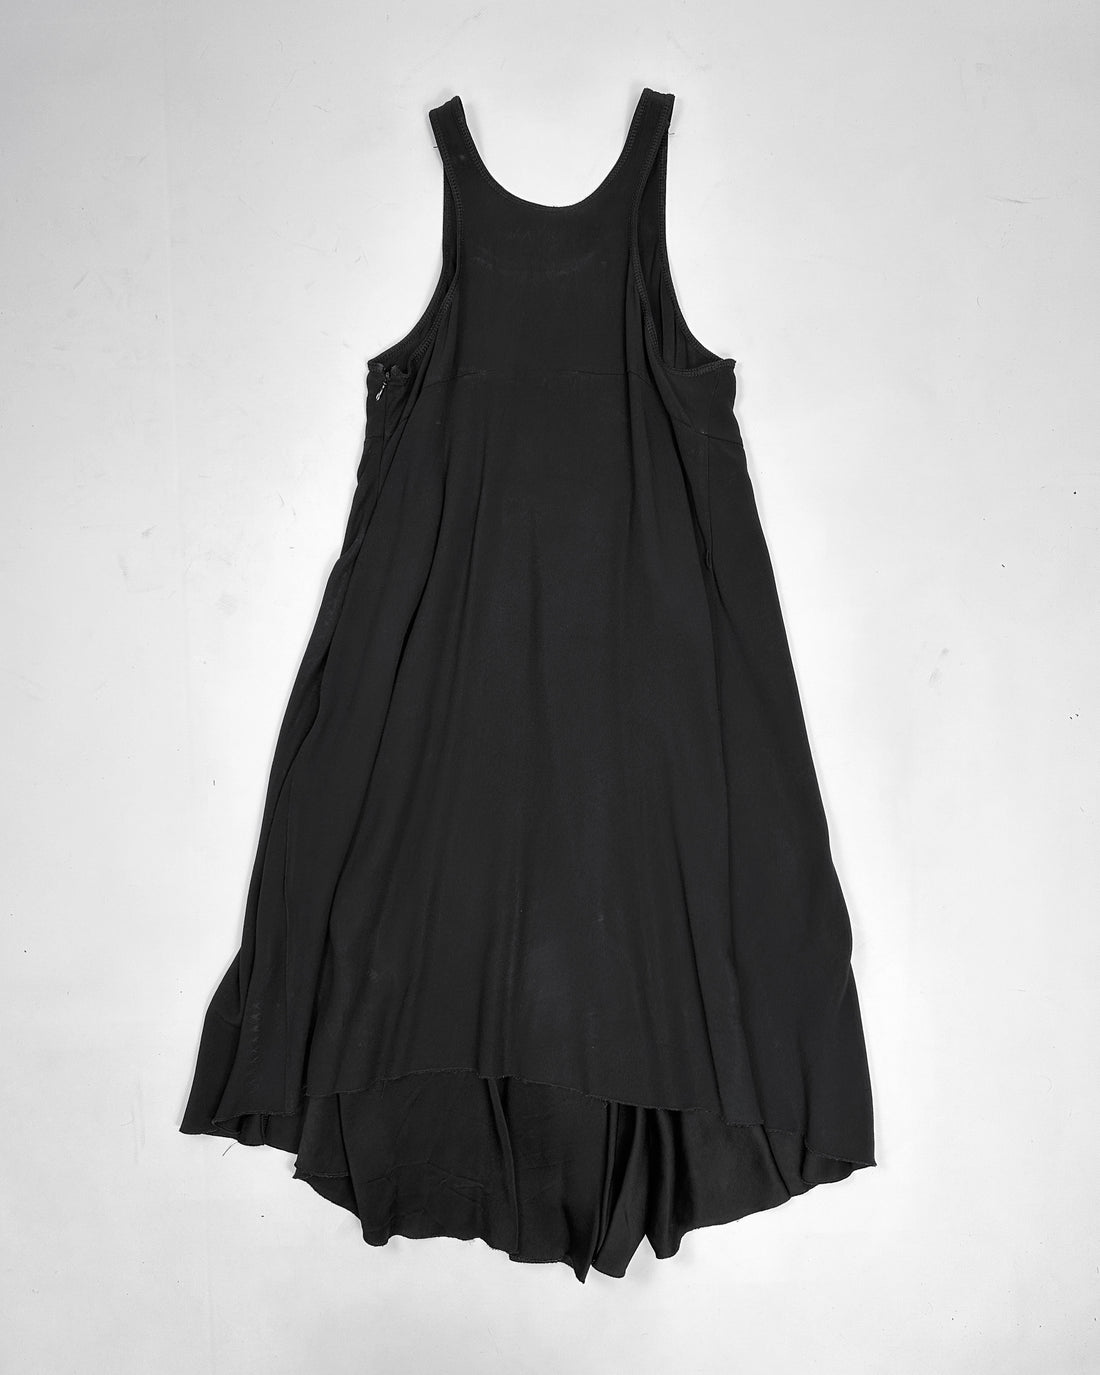 Prada Acetate Fabric Black Light Dress 2000's